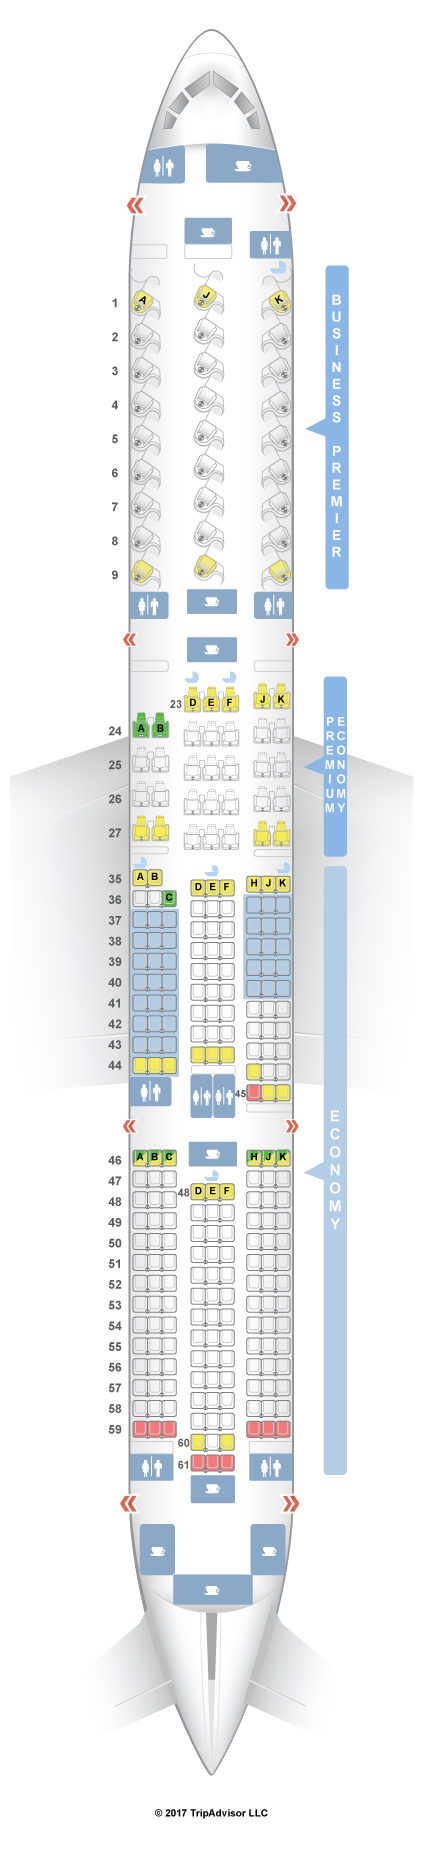 SeatGuru Seat Map Air New Zealand Boeing 787-9 V2 (789)